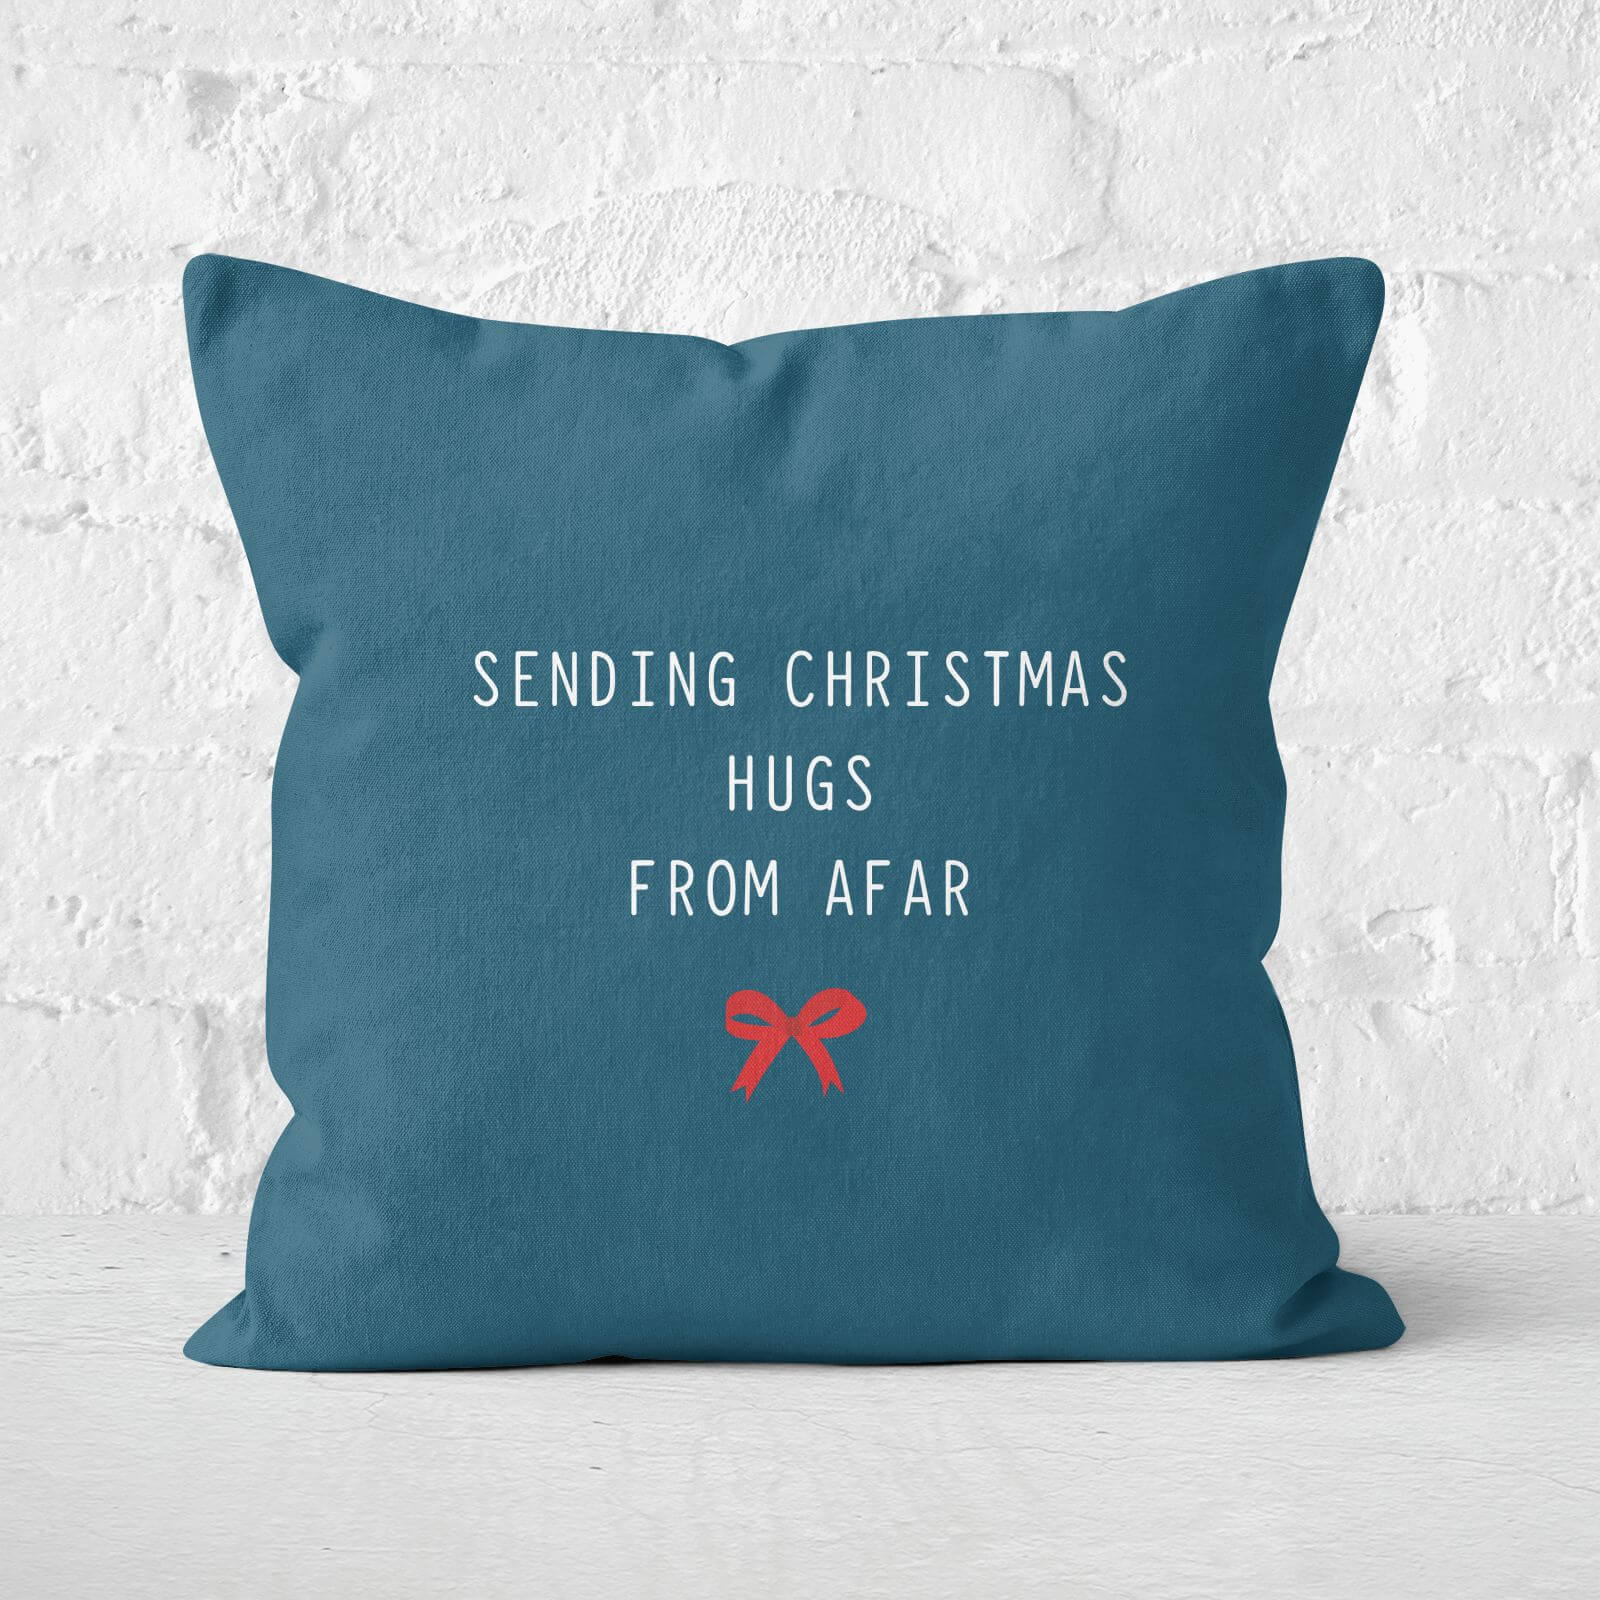 Sending Christmas Hugs From Afar Square Cushion - 60x60cm - Soft Touch